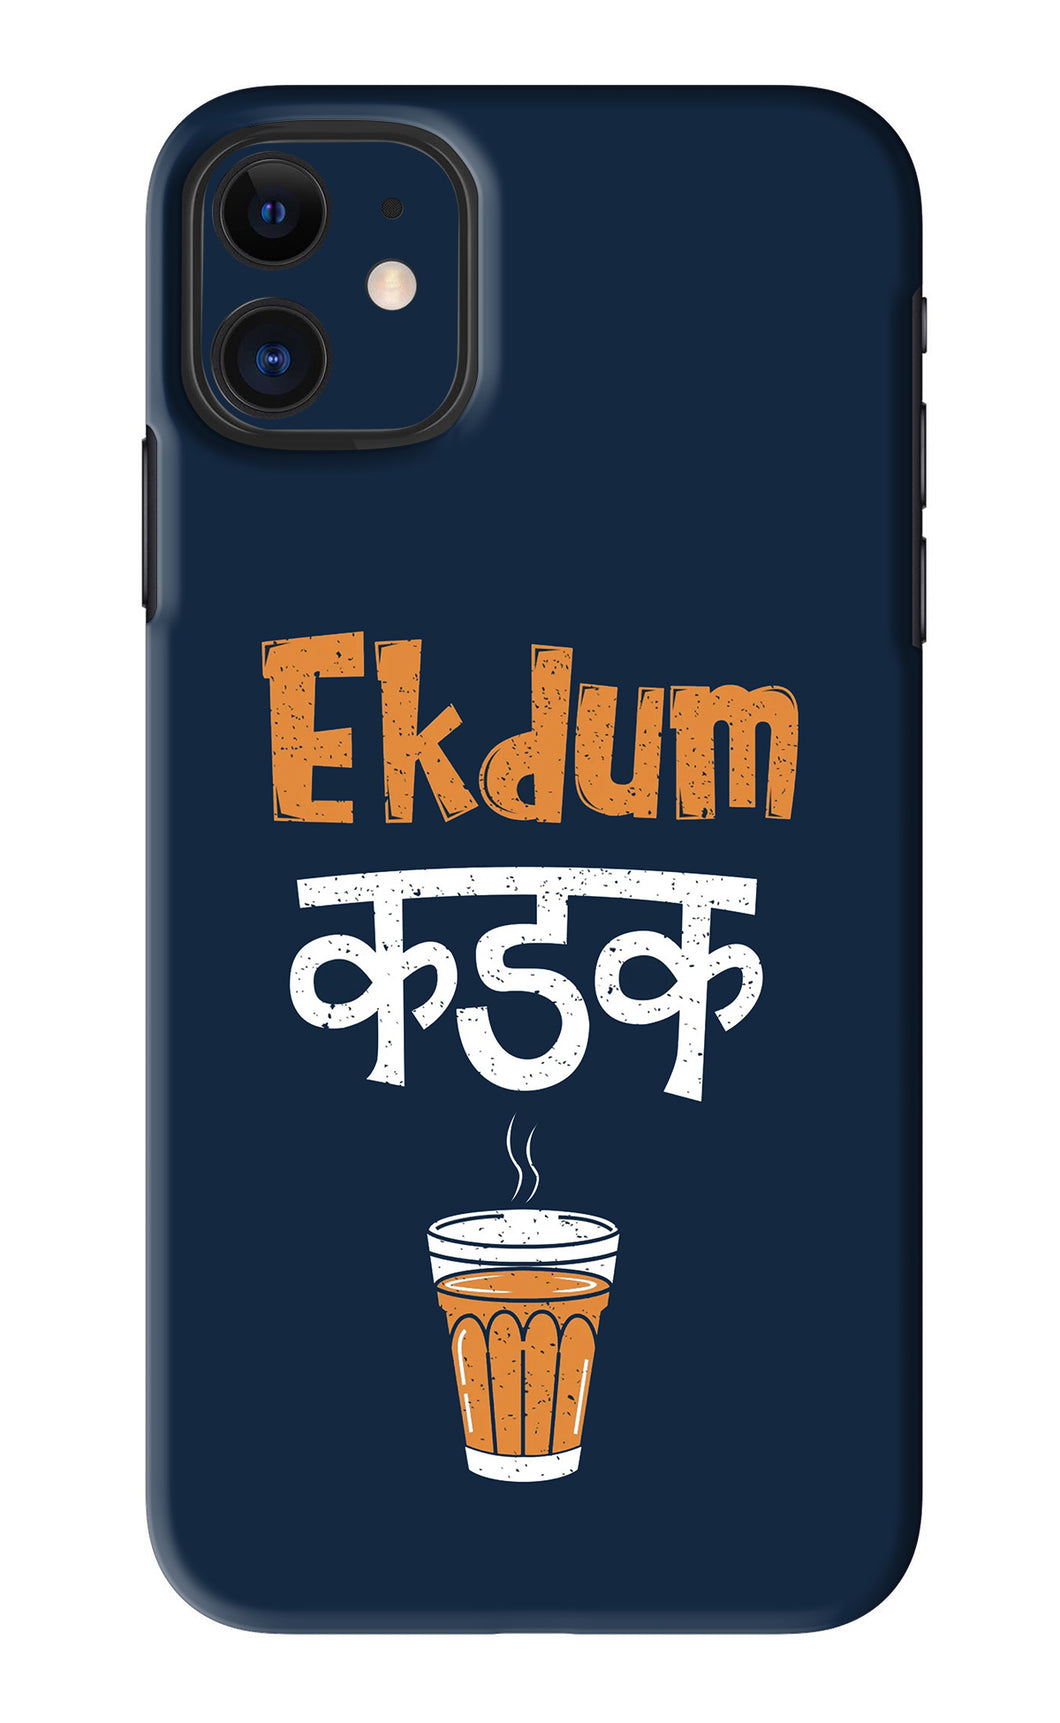 Ekdum Kadak Chai iPhone 11 Back Skin Wrap